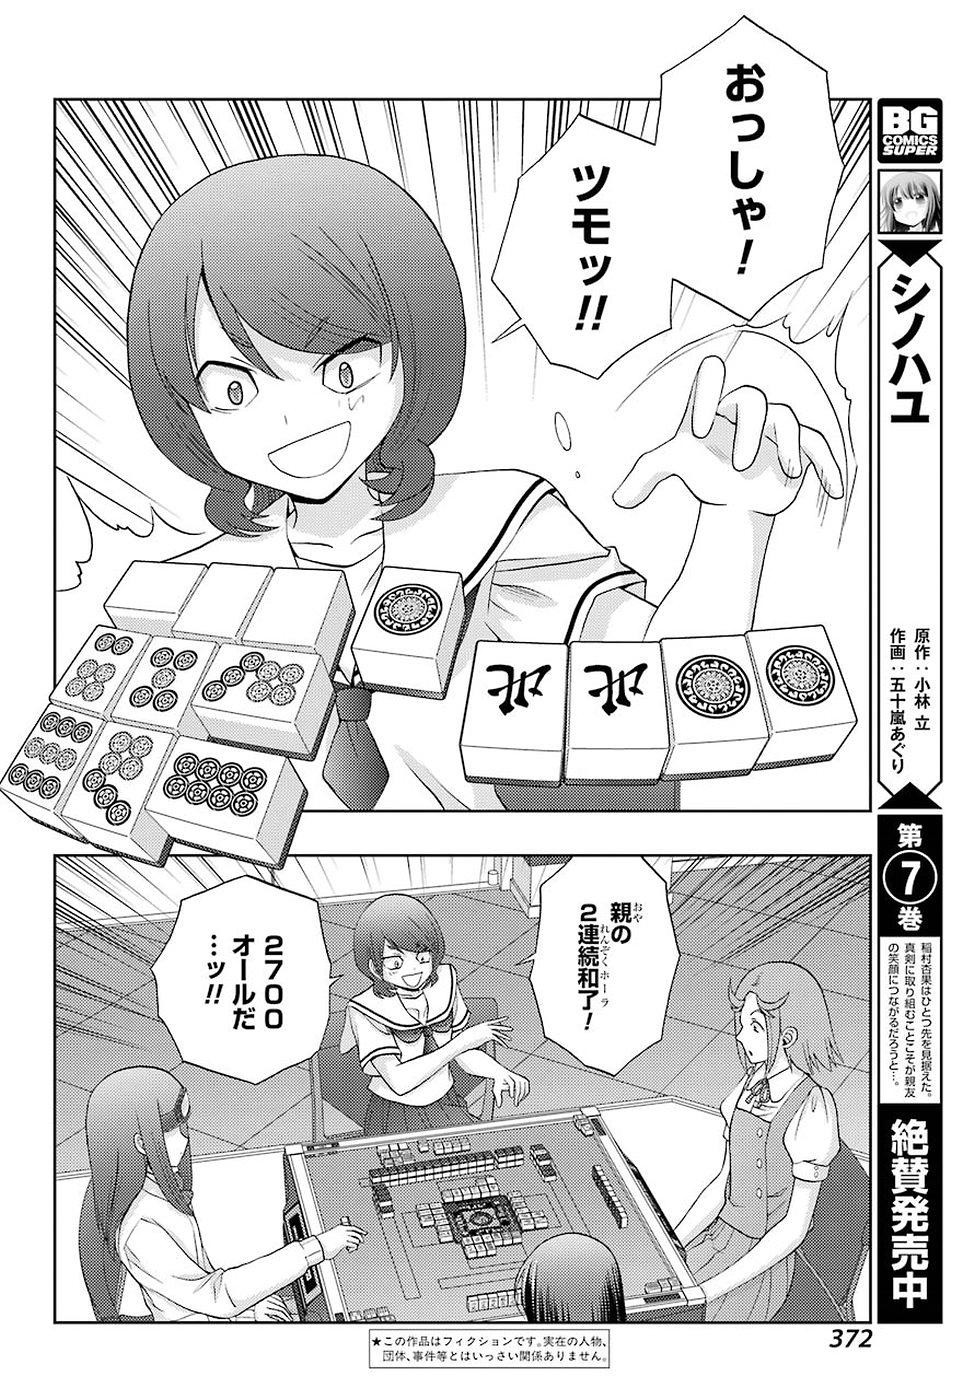 Shinohayu - The Dawn of Age Manga - Chapter 046 - Page 2